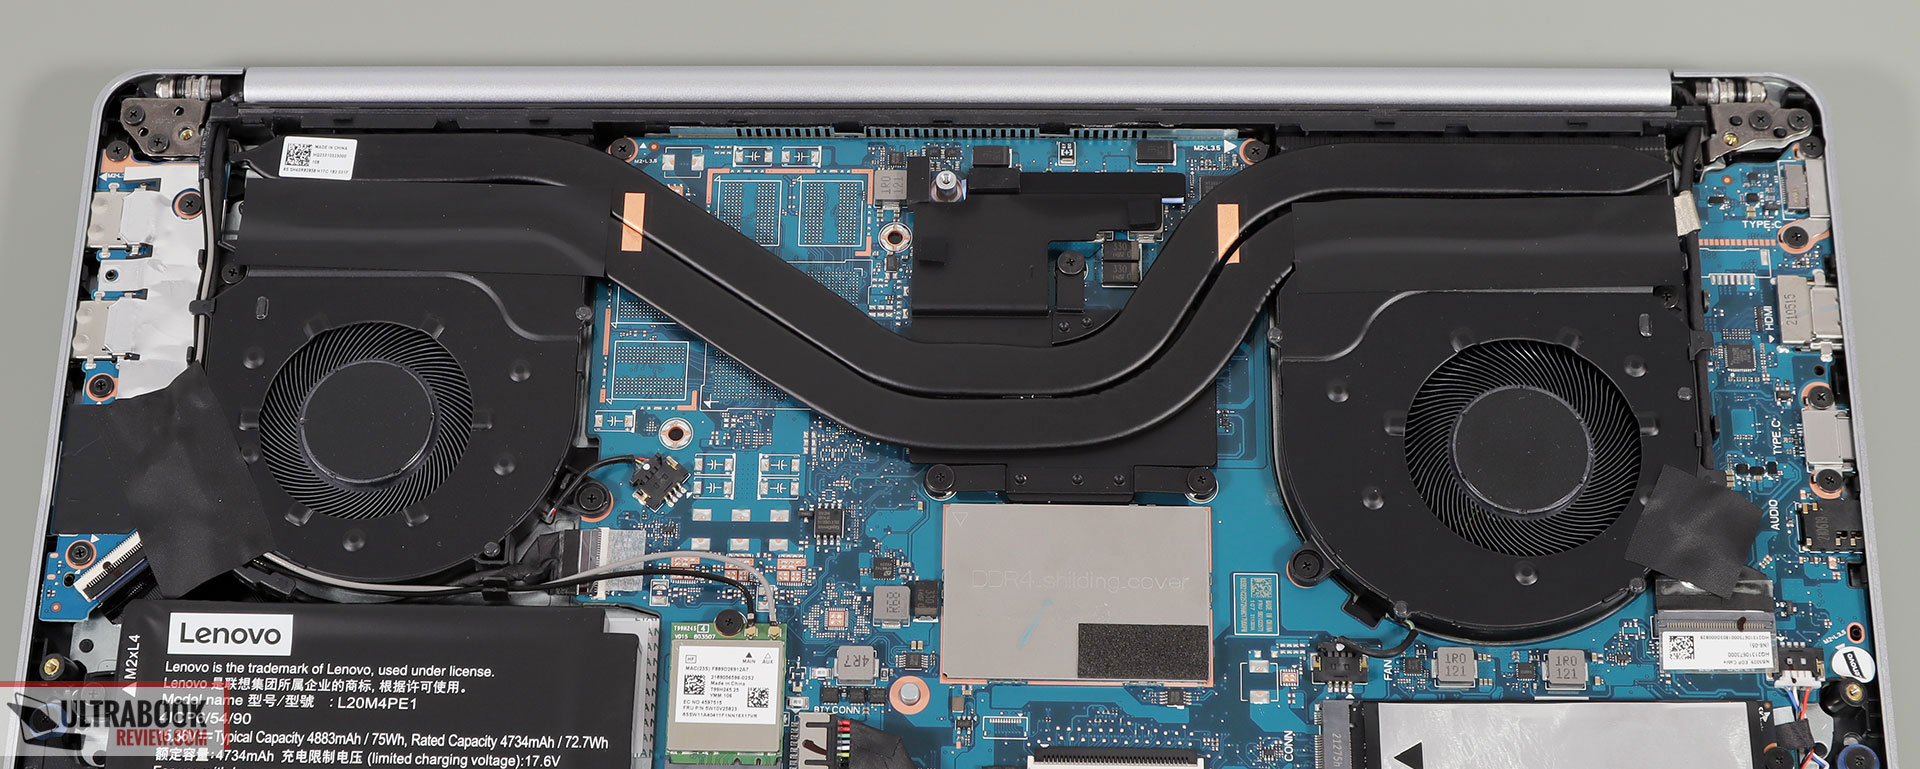 Ryzen IdeaPad 16-inch Lenovo Pro budget 16:10 16 laptop review - 5 AMD